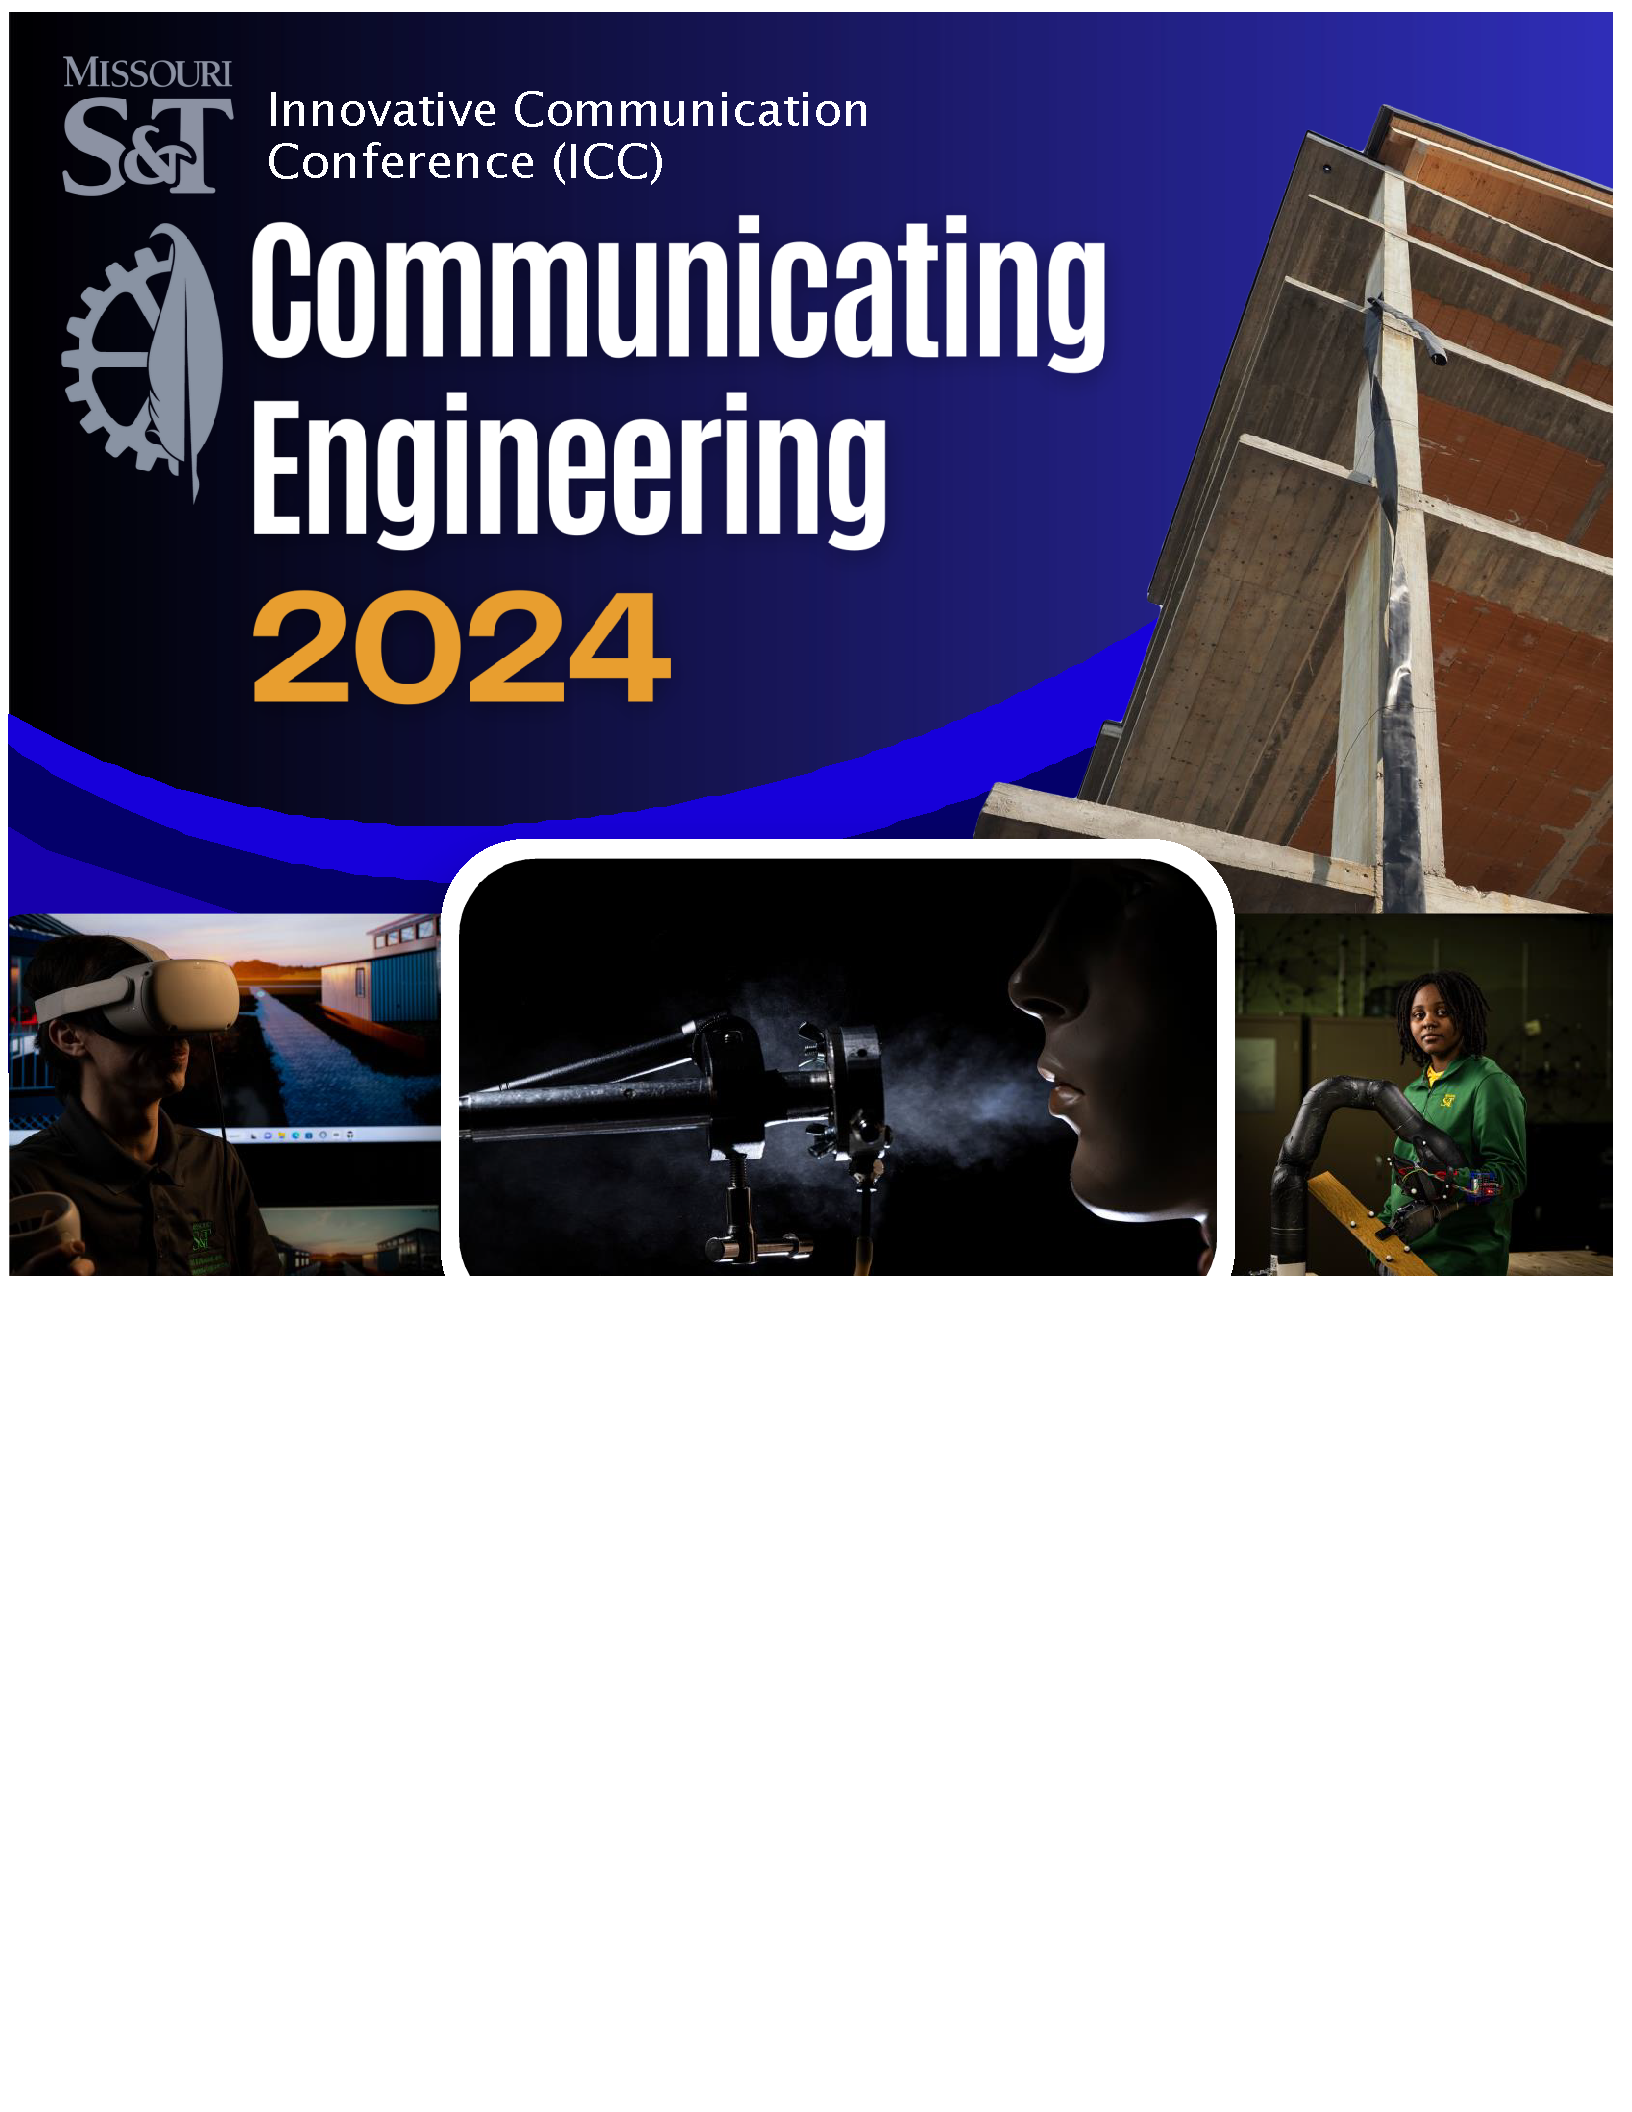 2:30pm - 3:30pm Communicating Engineering